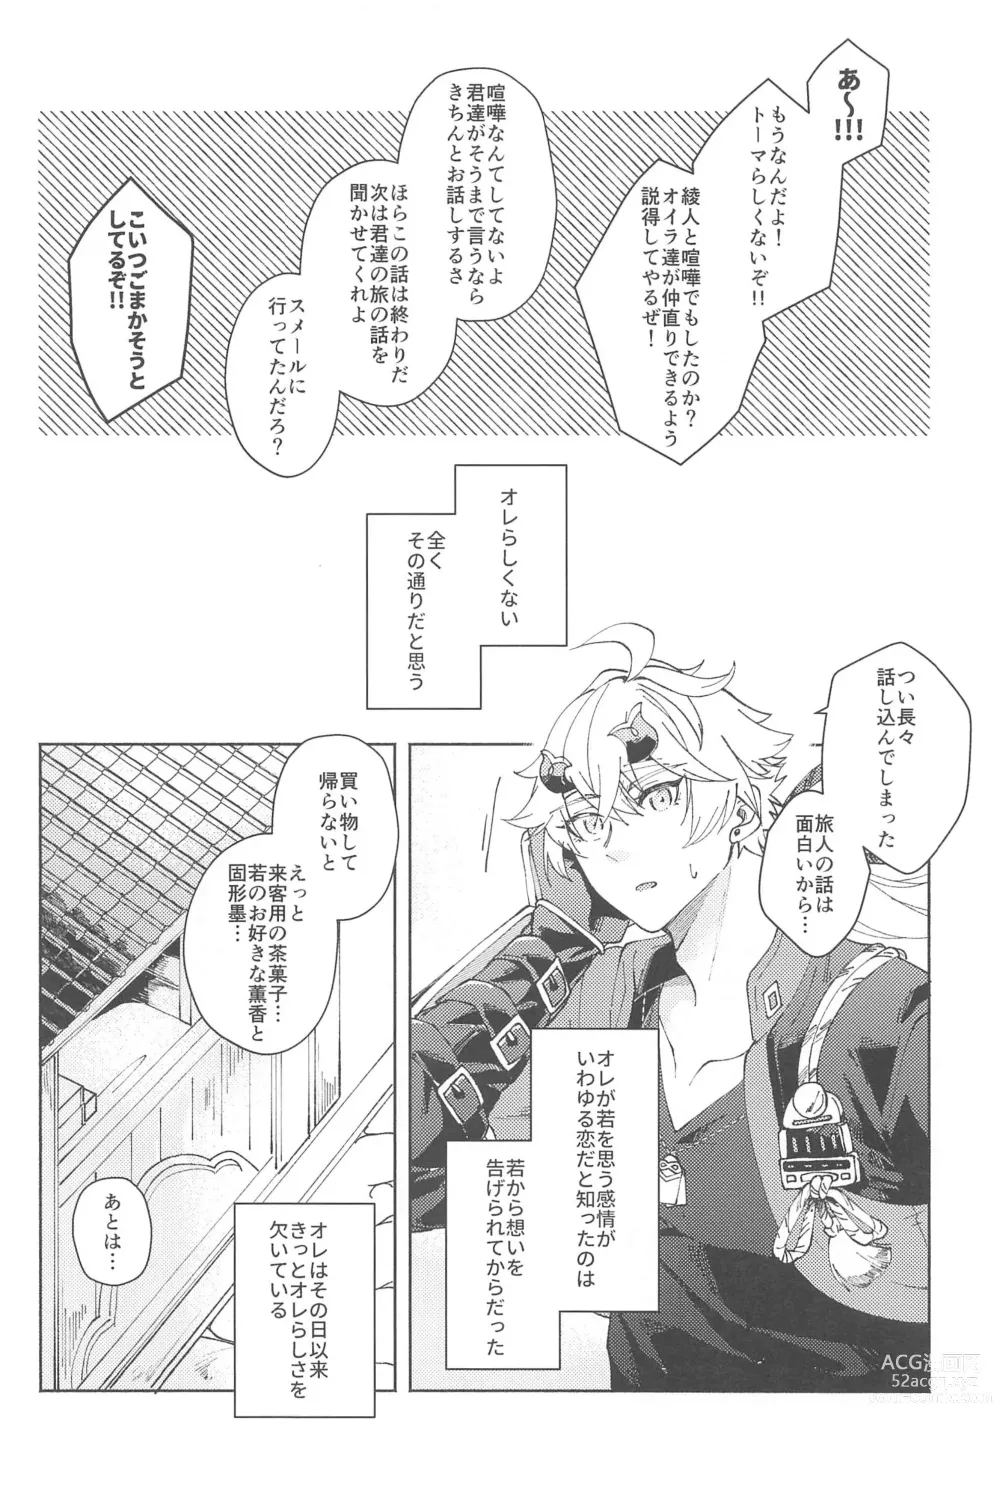 Page 7 of doujinshi Zenbu Kimi no Mono